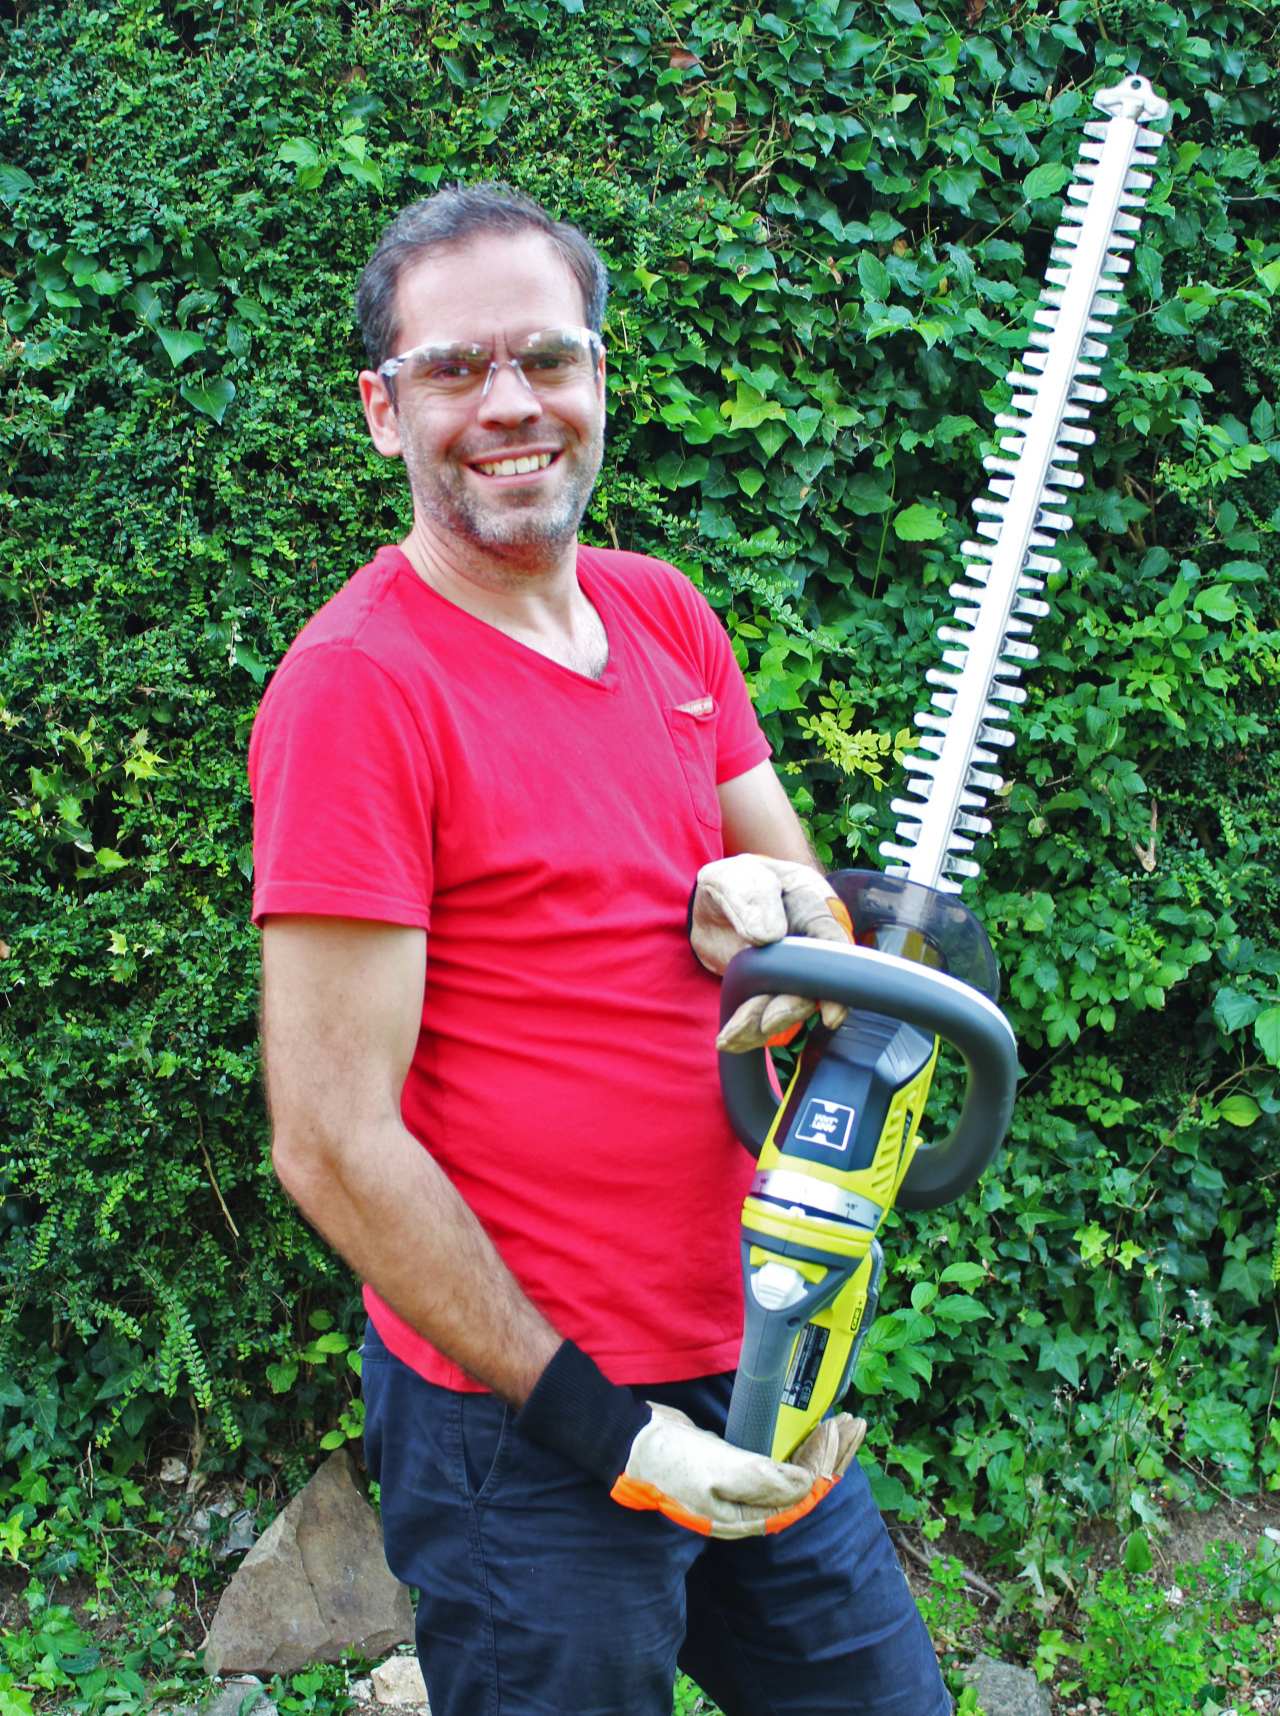 Ryobi cordless hedge trimmer: Up to the task? - Dad Blog UK